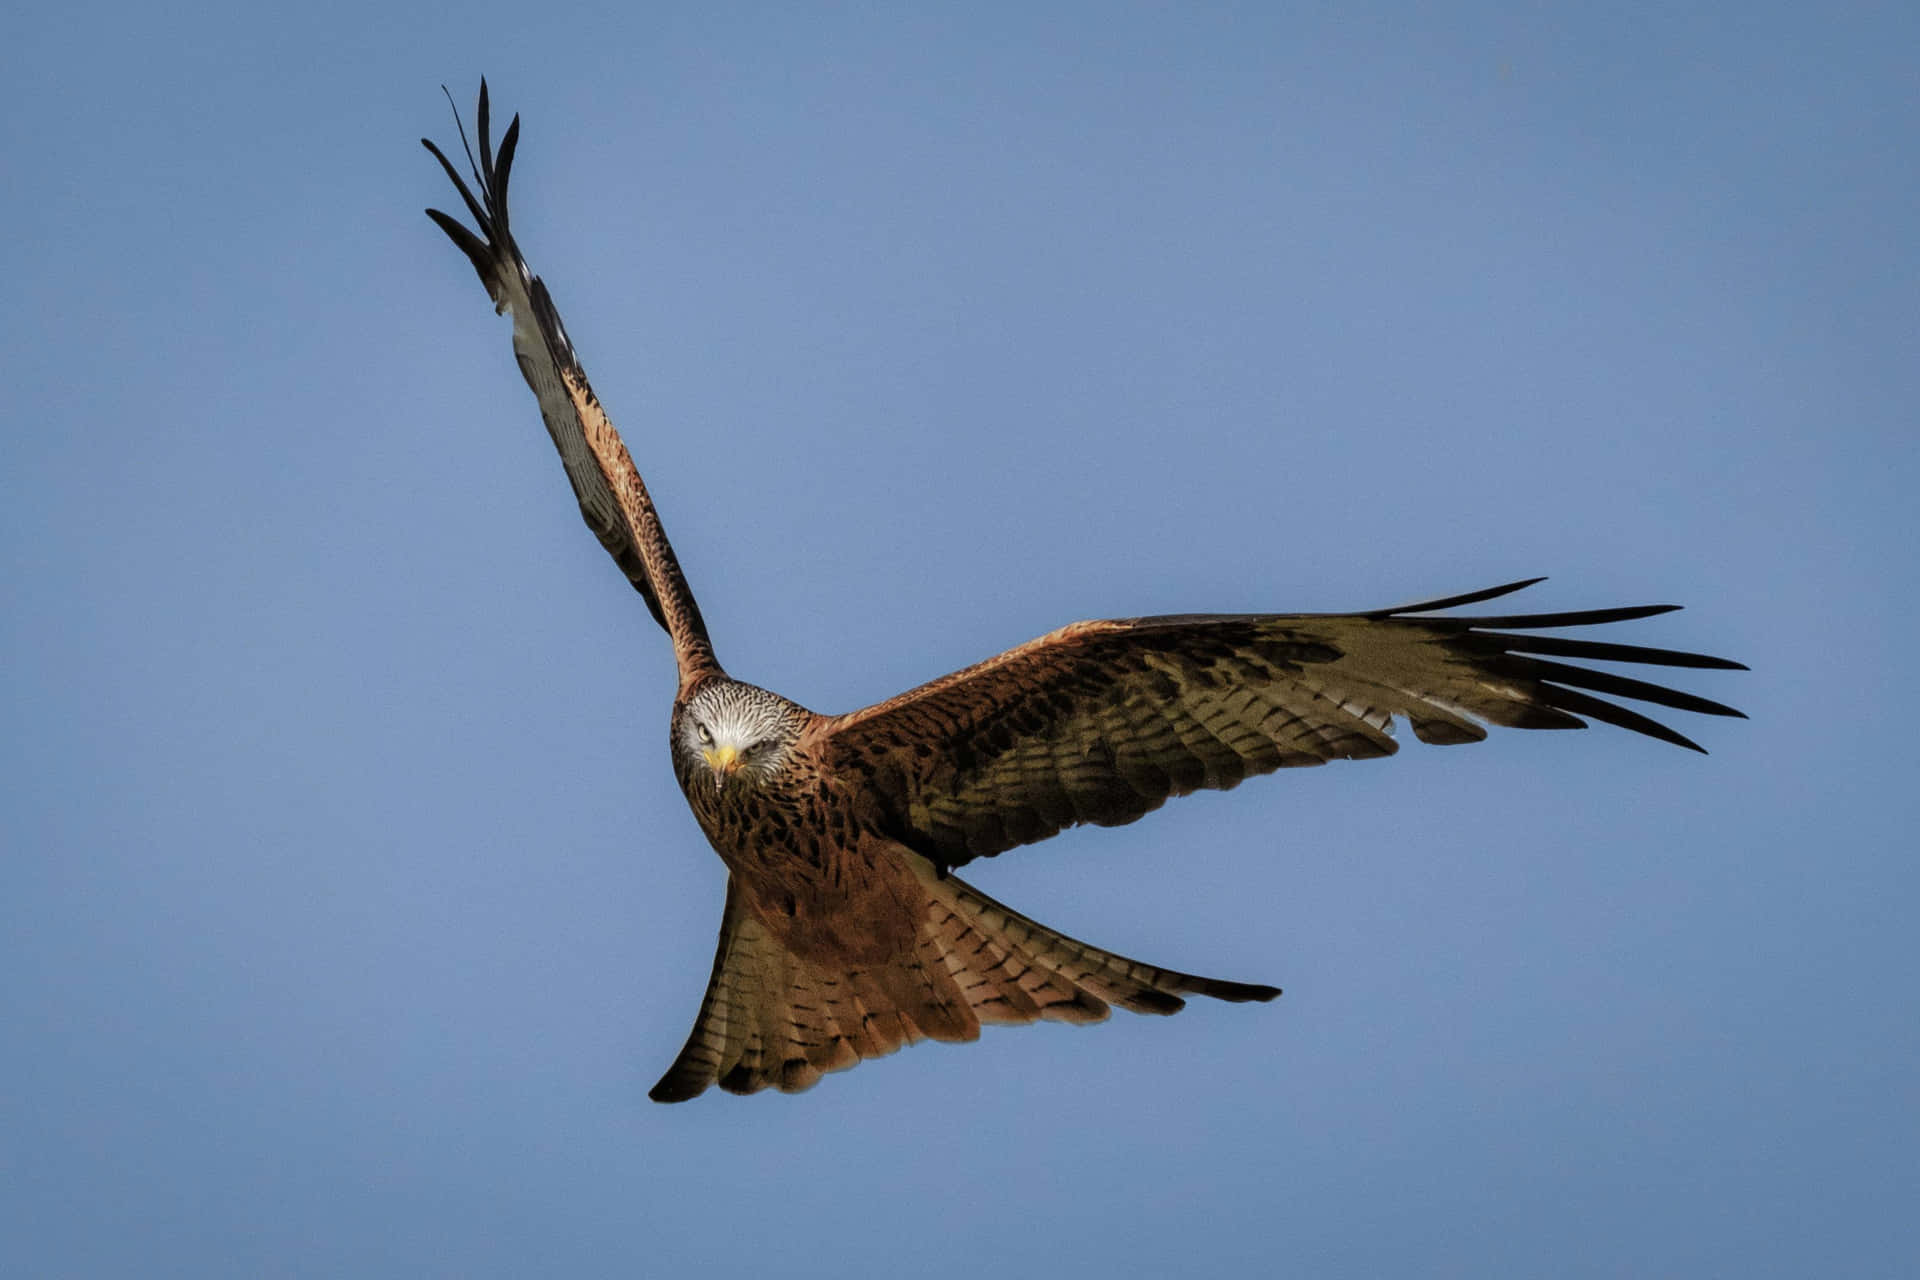 Majestic Red Kite Falcon soaring in the skies Wallpaper